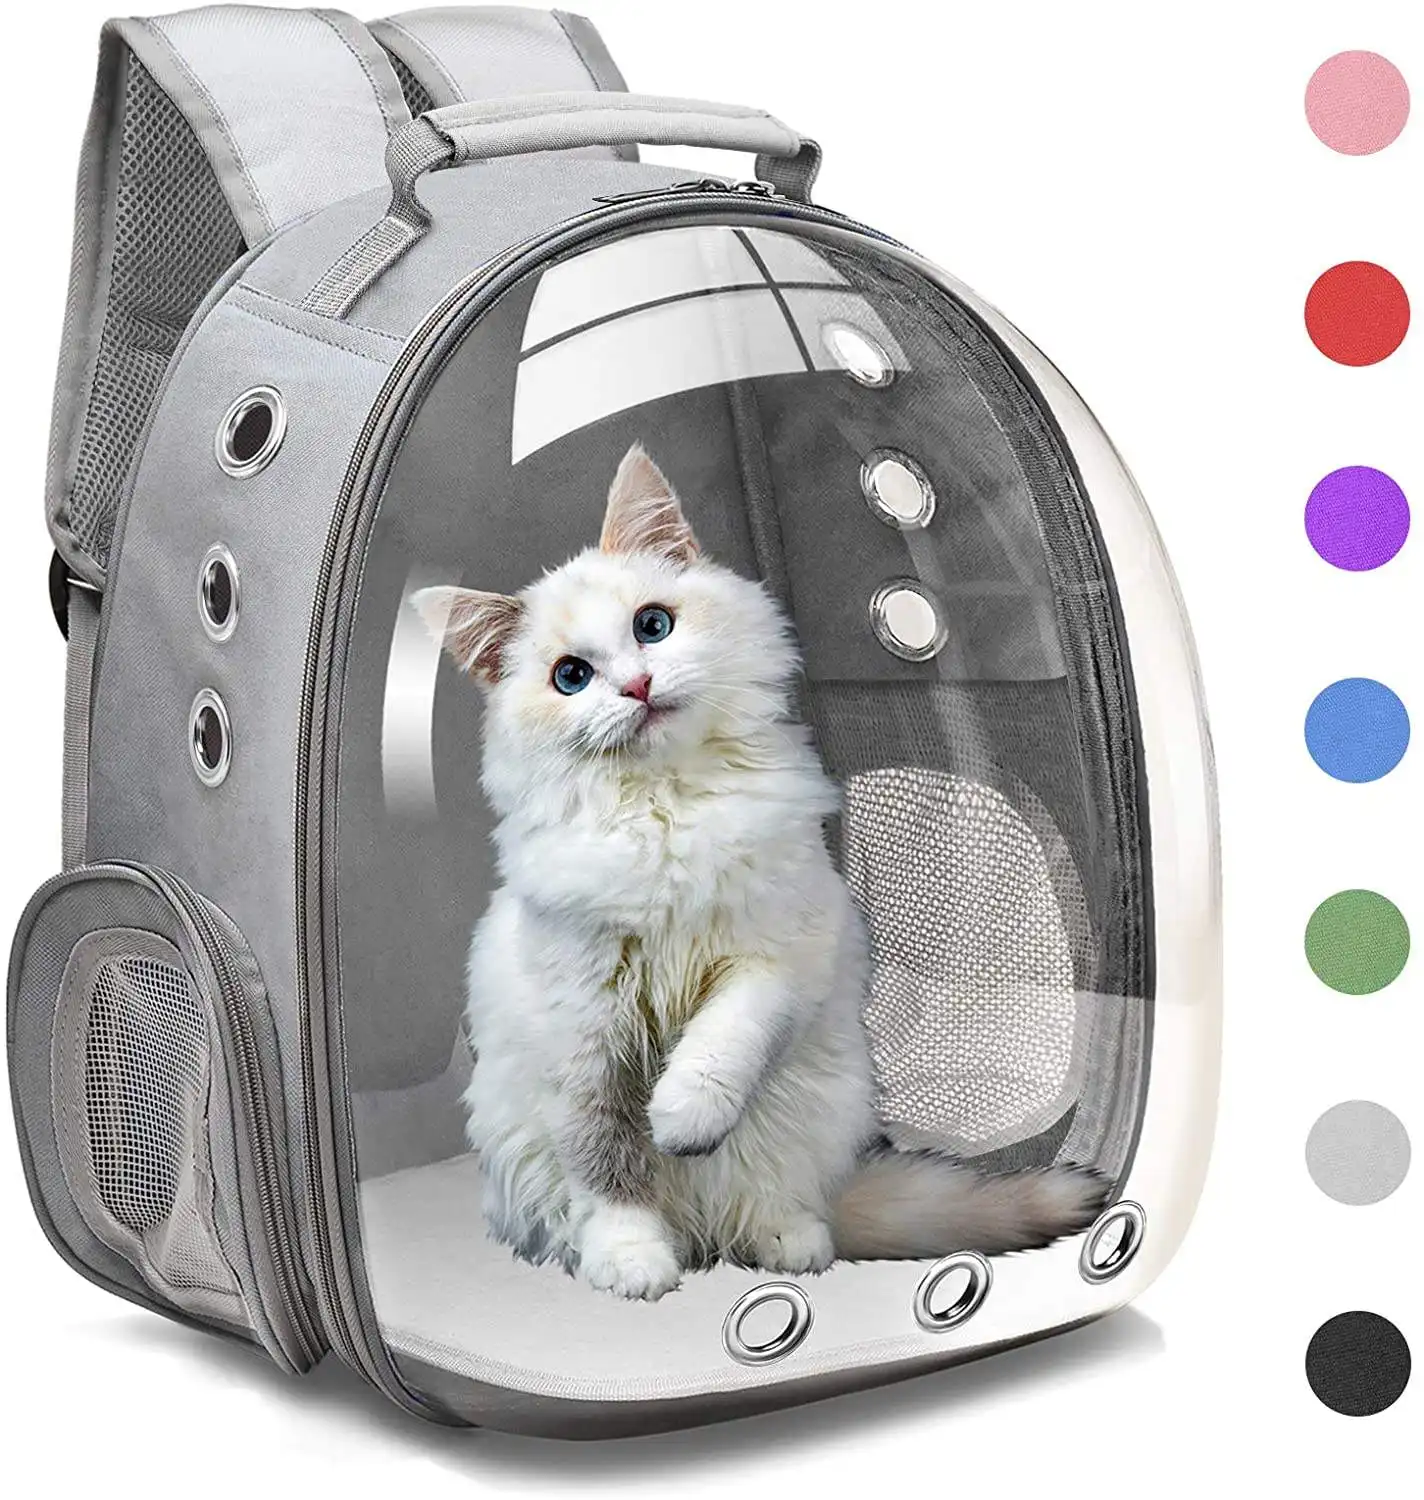 Cat backpack Amazon